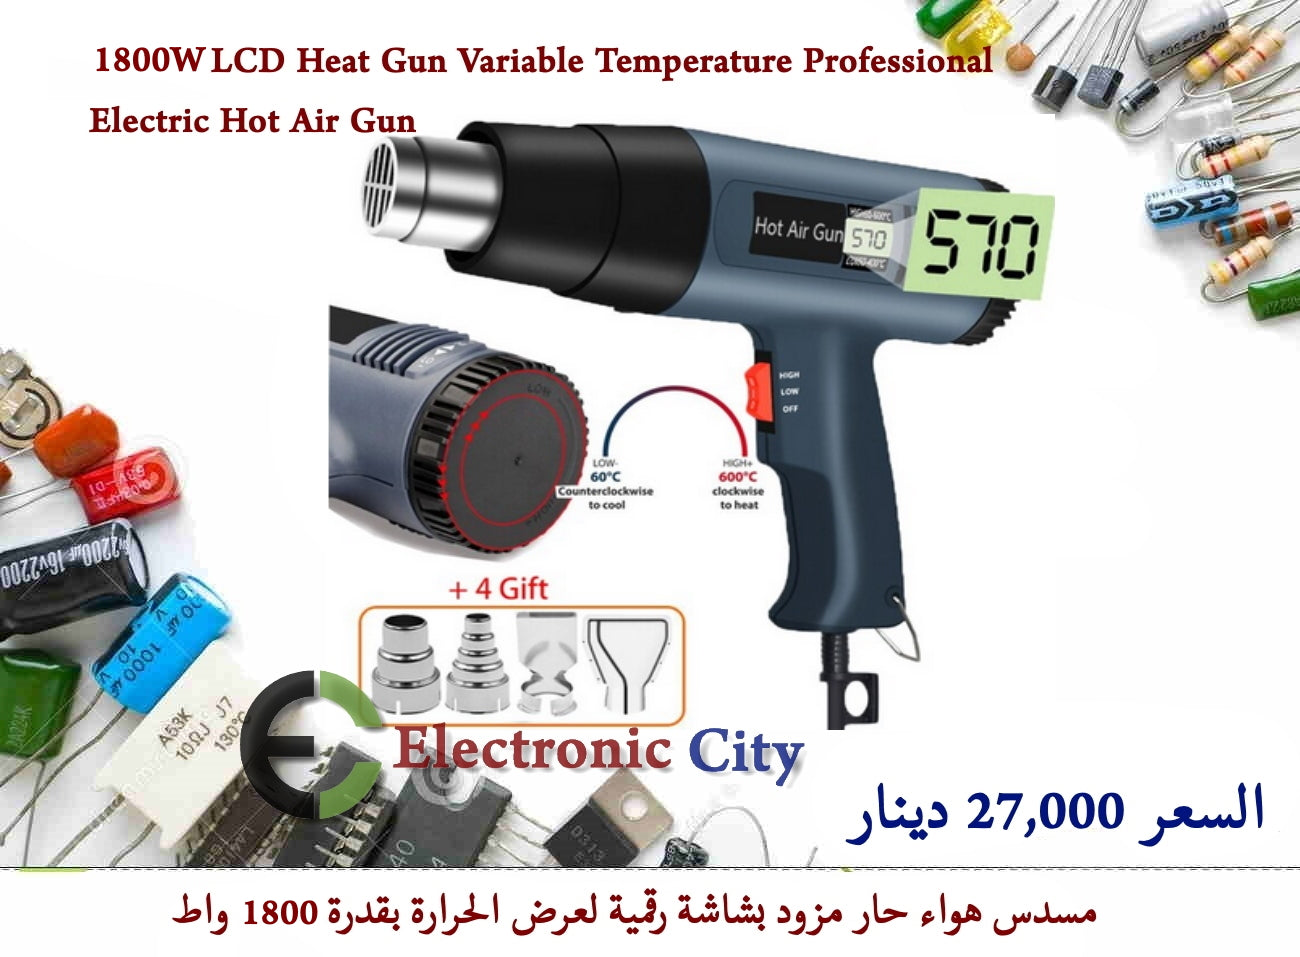 1800W LCD Heat Gun Variable Temperature Professional Electric Hot Air Gun